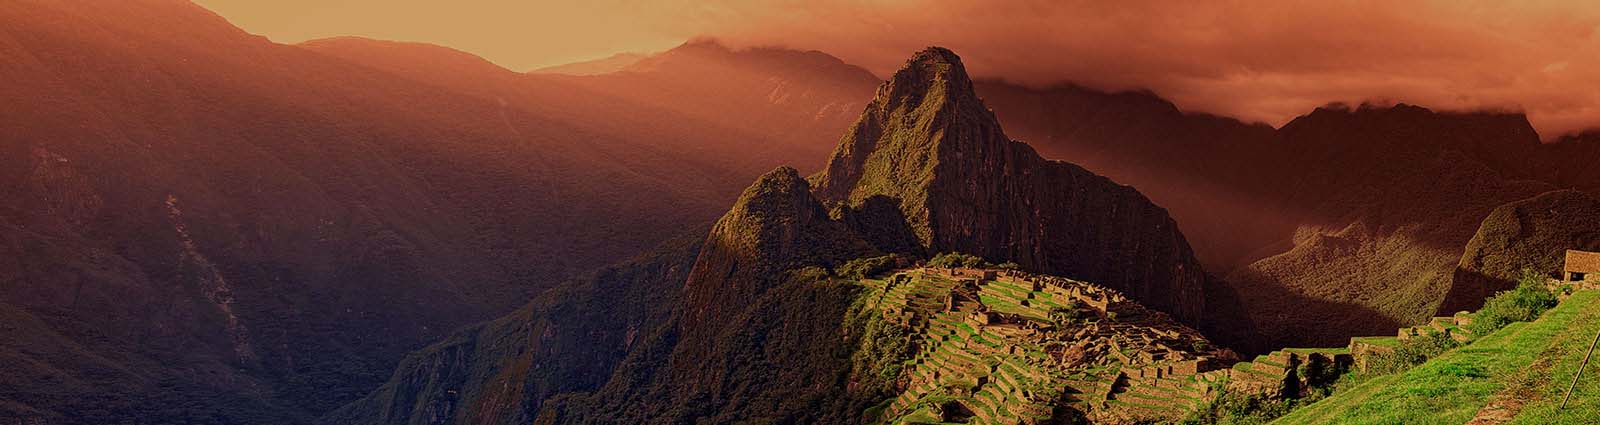 Machu Picchu, the world heritage Inca site.